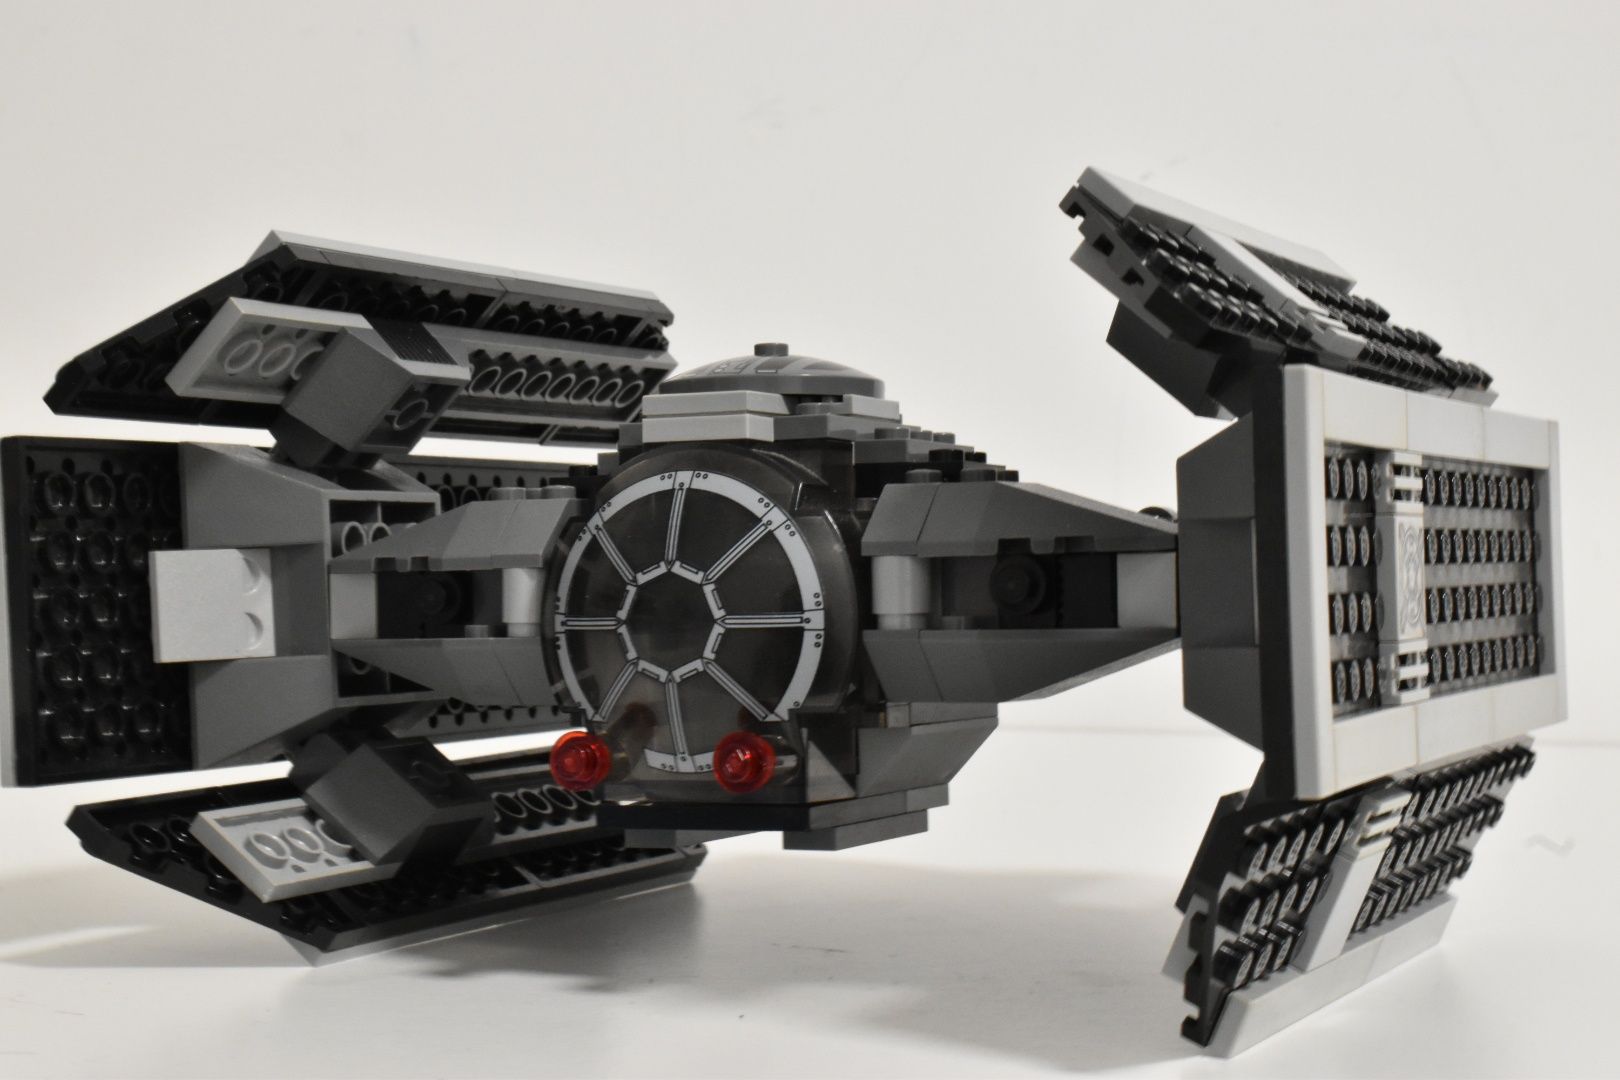 Klocki lego 8017 Darth Vader's TIE Fighter lego Star Wars